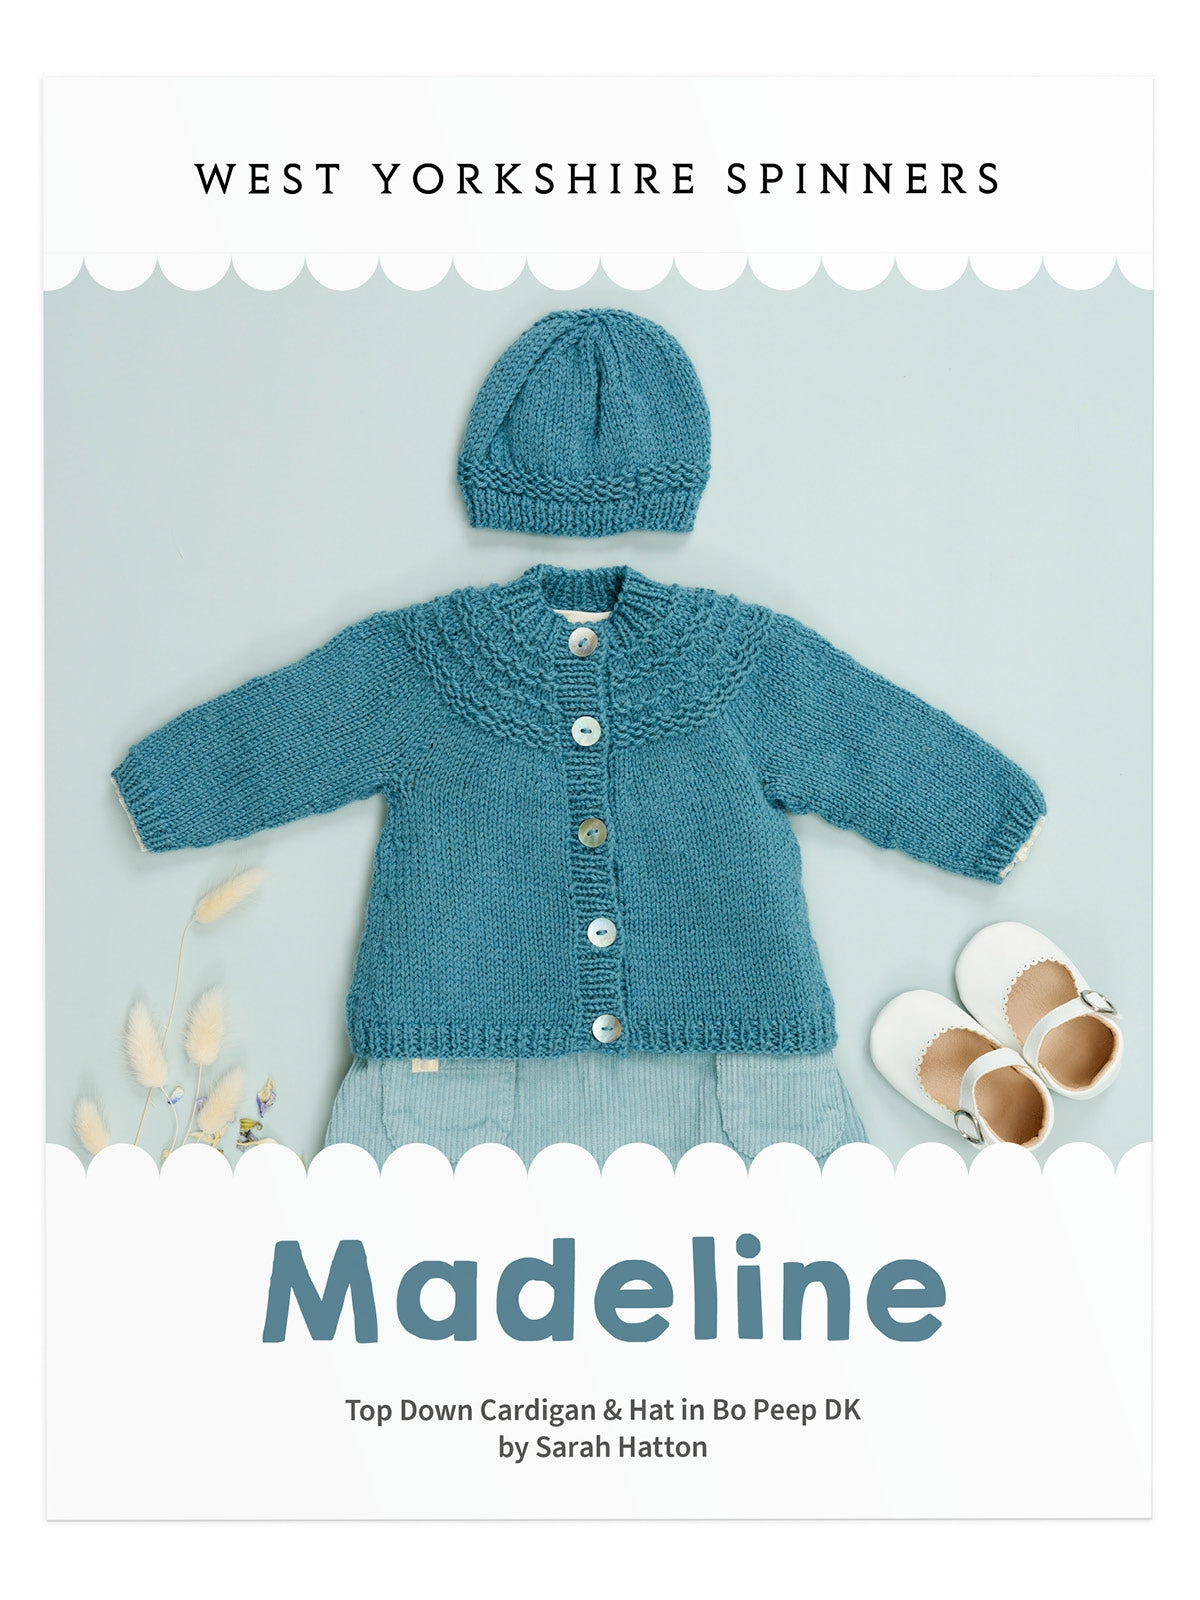 WYS Madeline: Yoke Cardigan & Hat in Bo Peep DK by Sarah Hatton